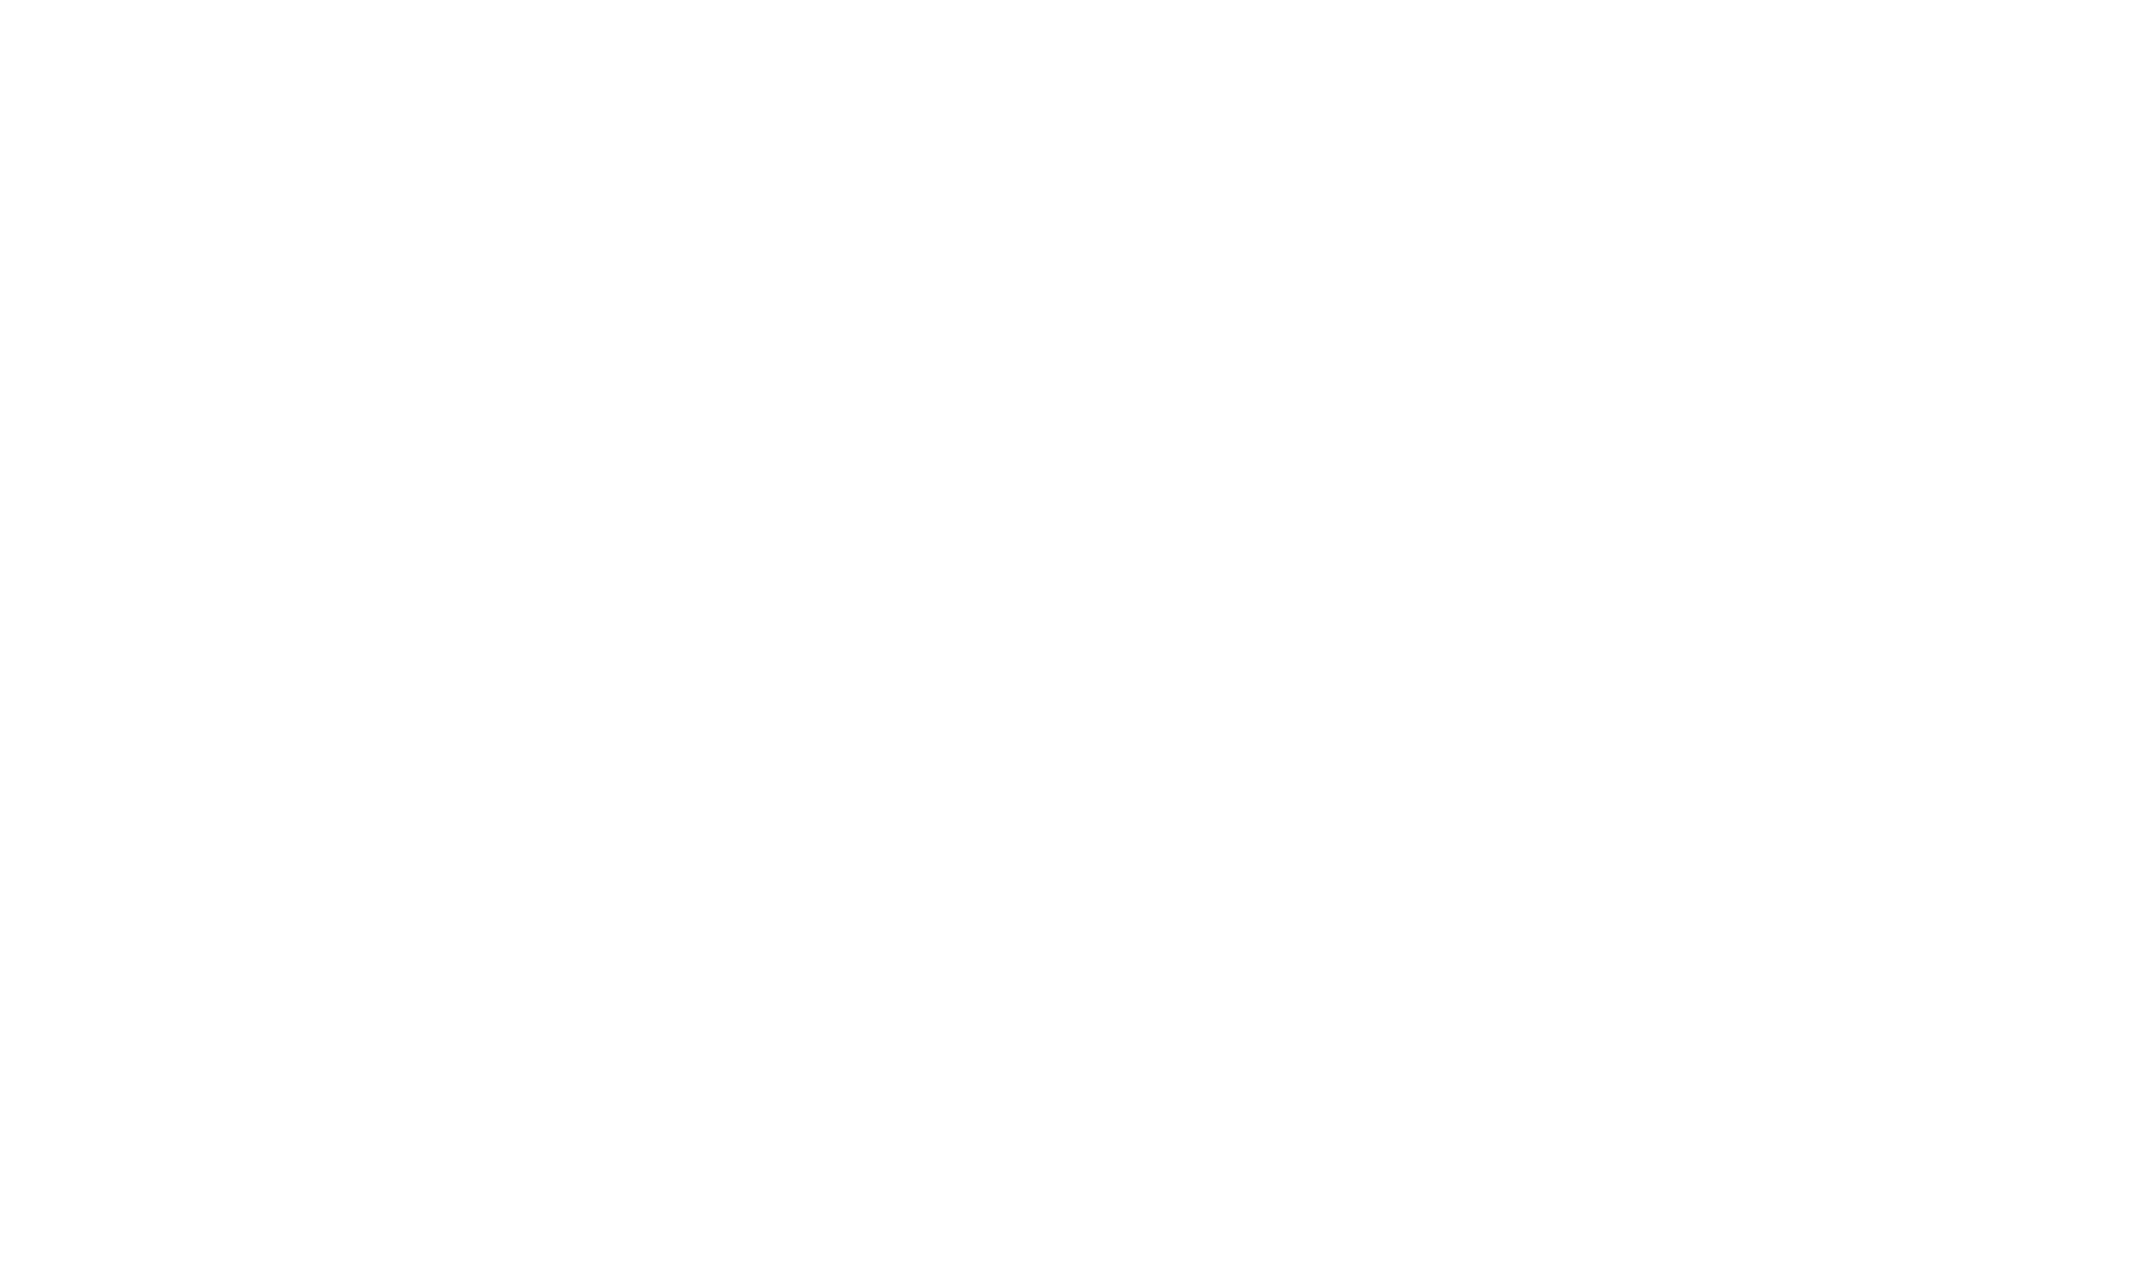 Grant Noble